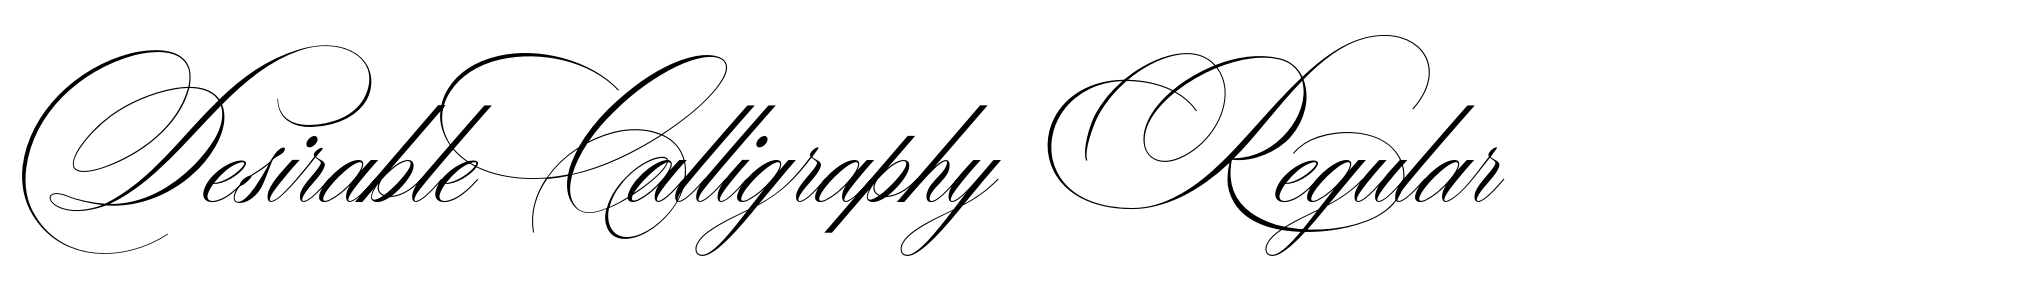 Desirable Calligraphy Regular image